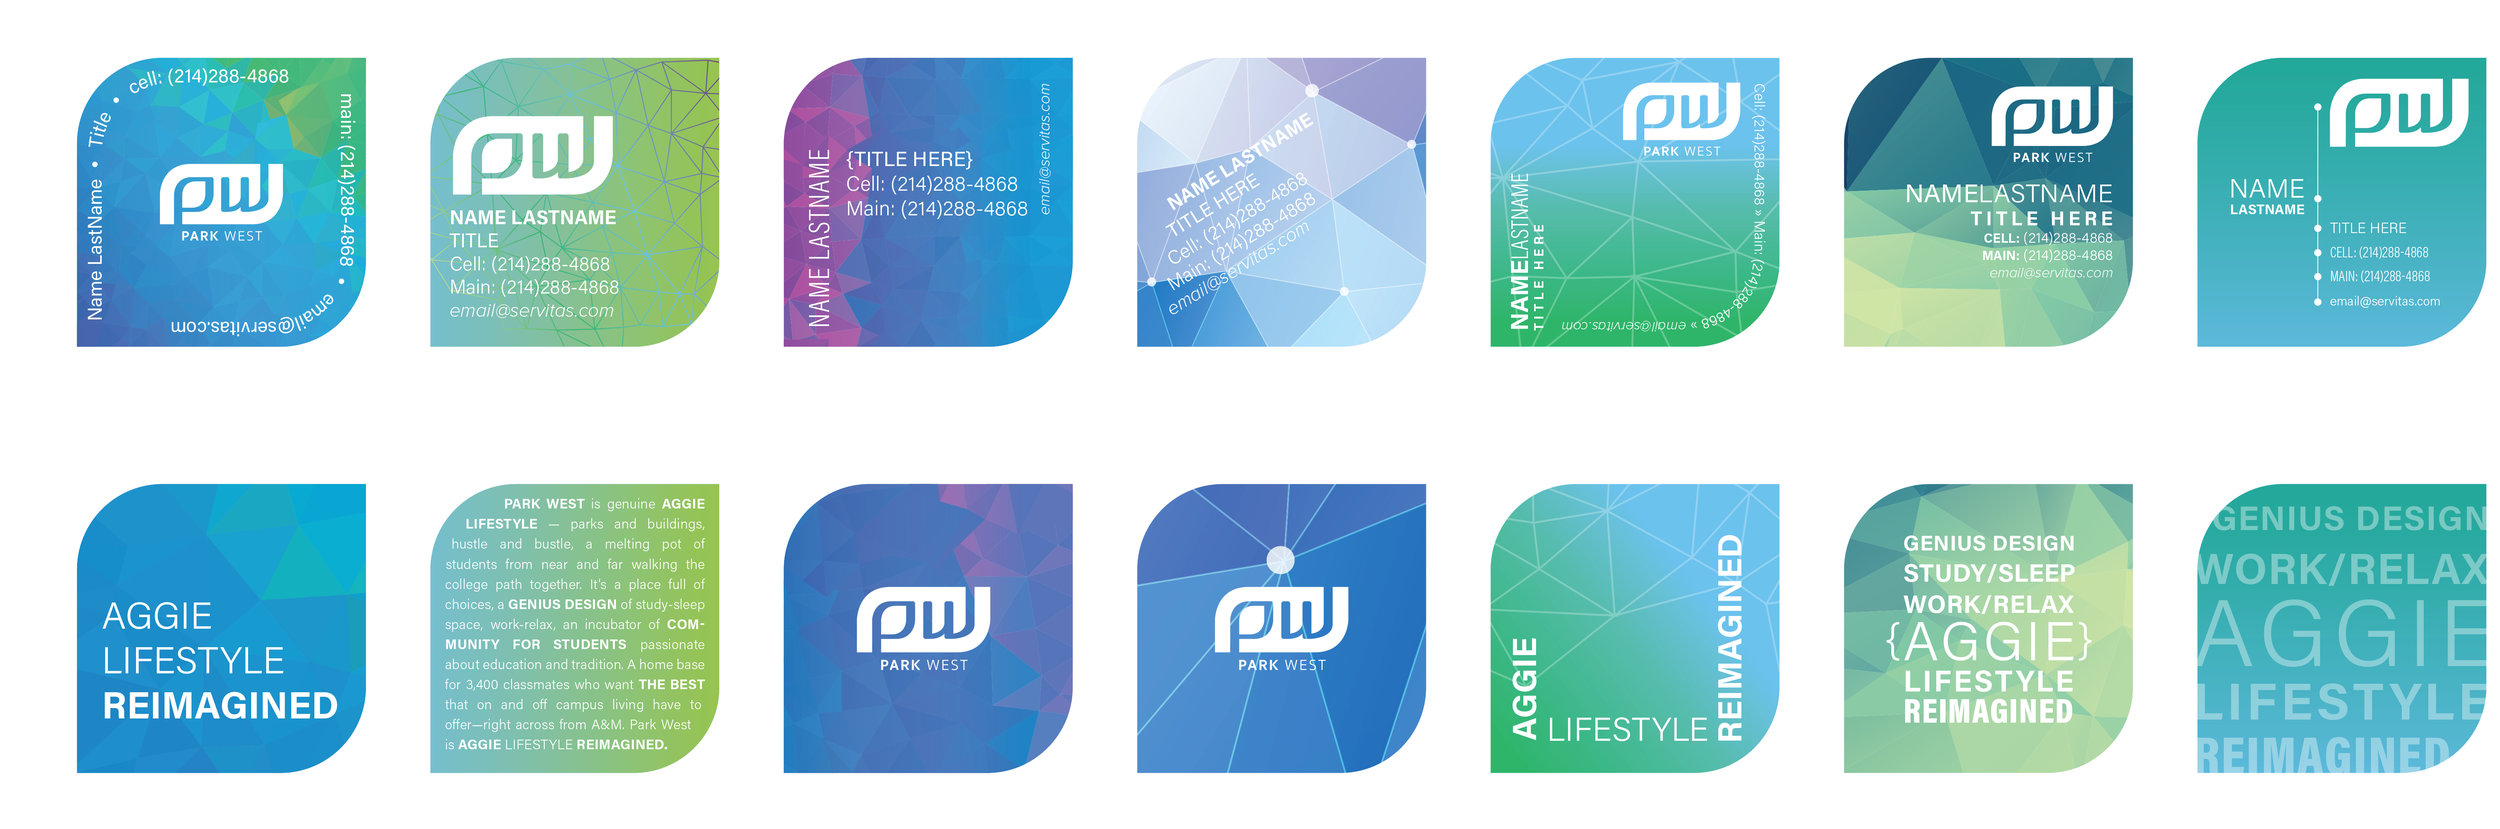 PW Business Card Designs.jpg